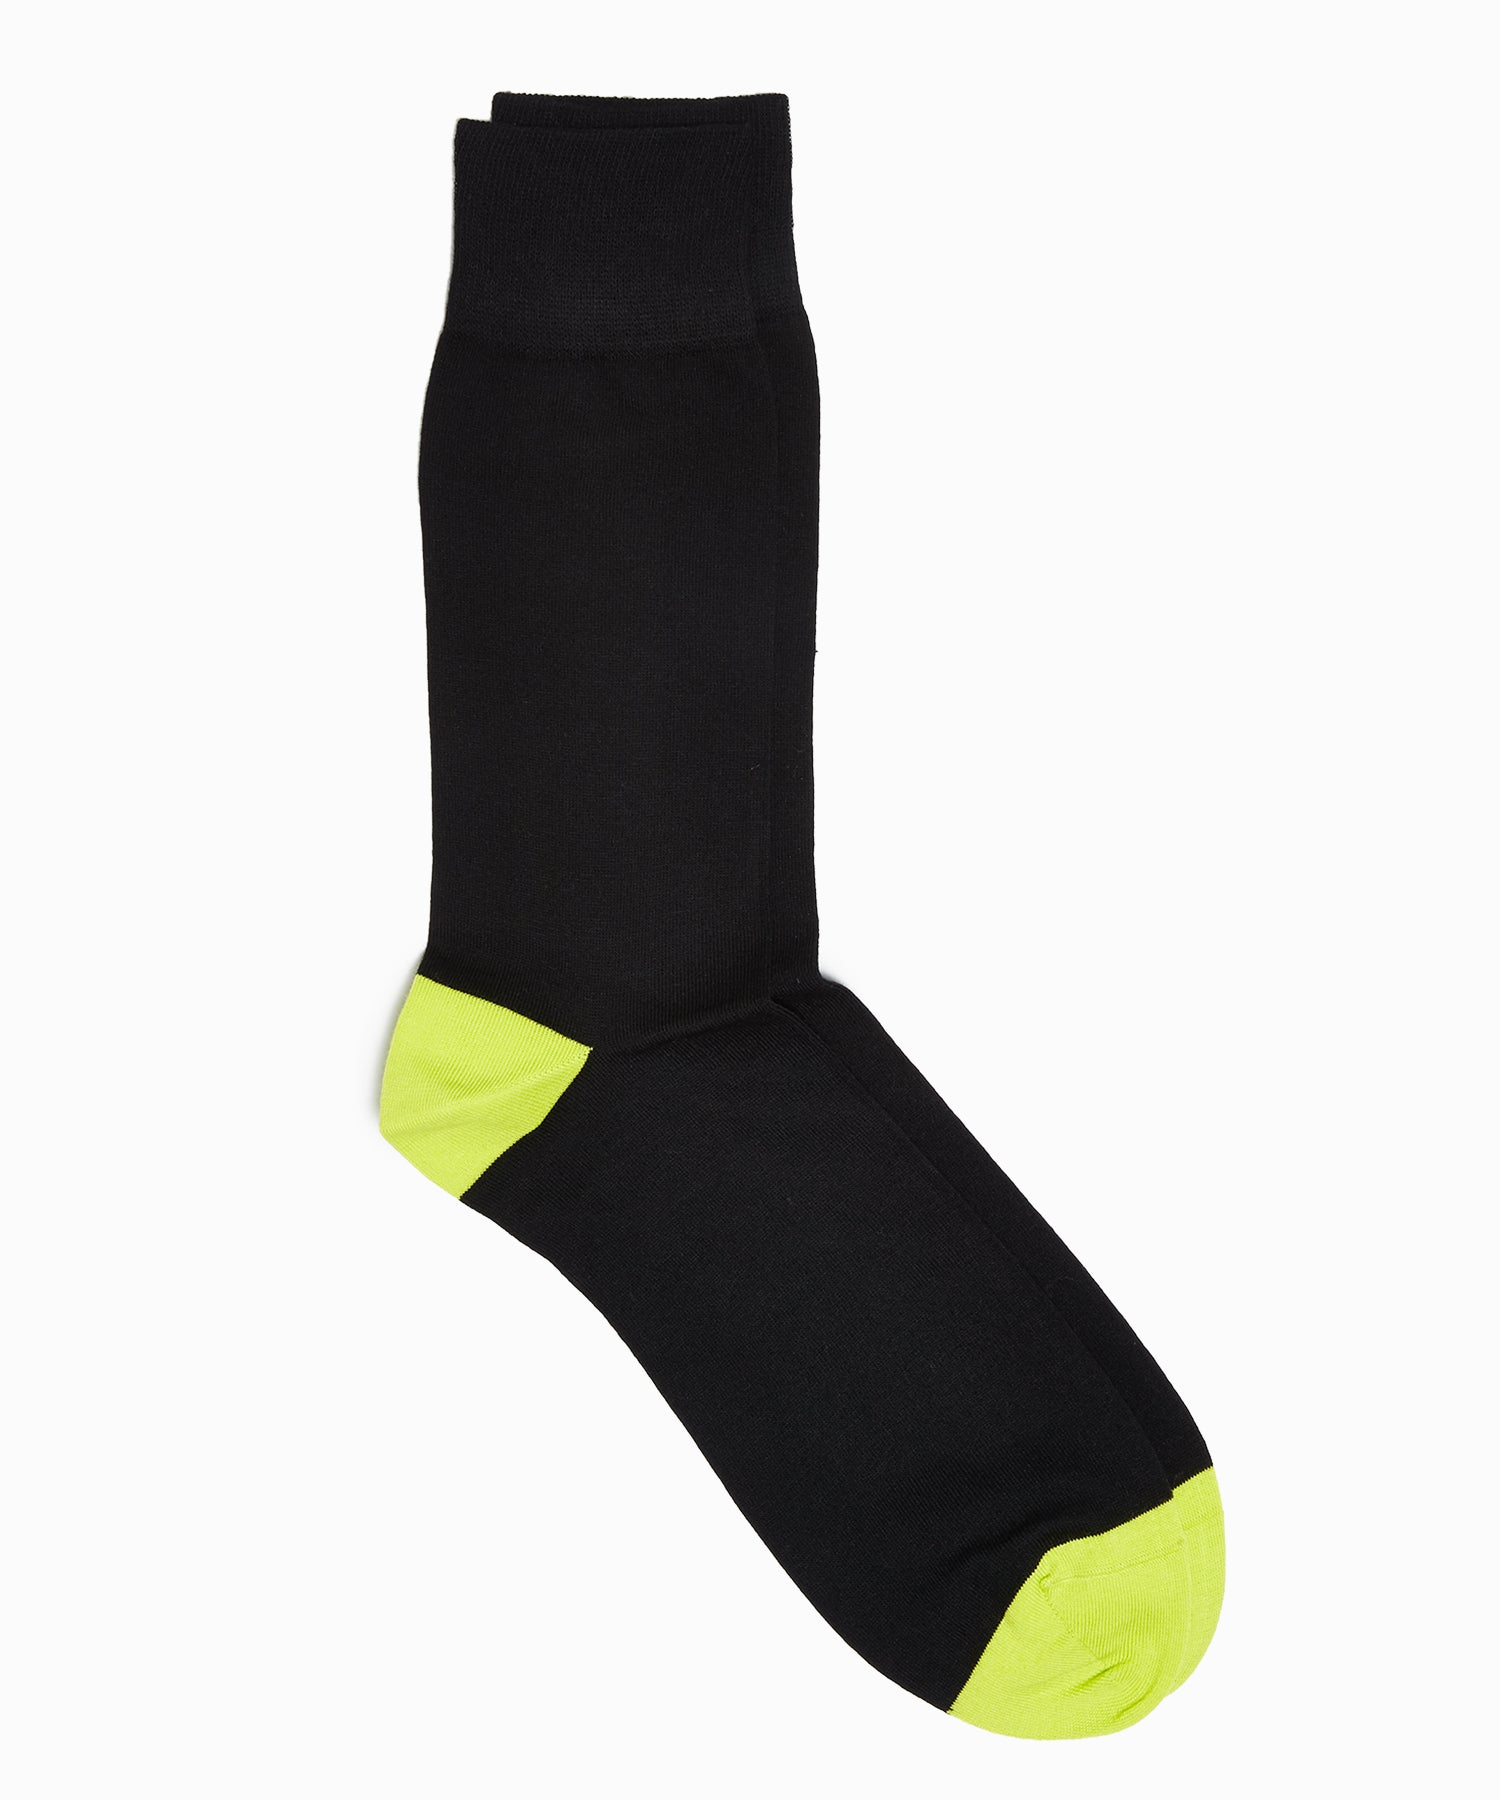 heel and toe socks